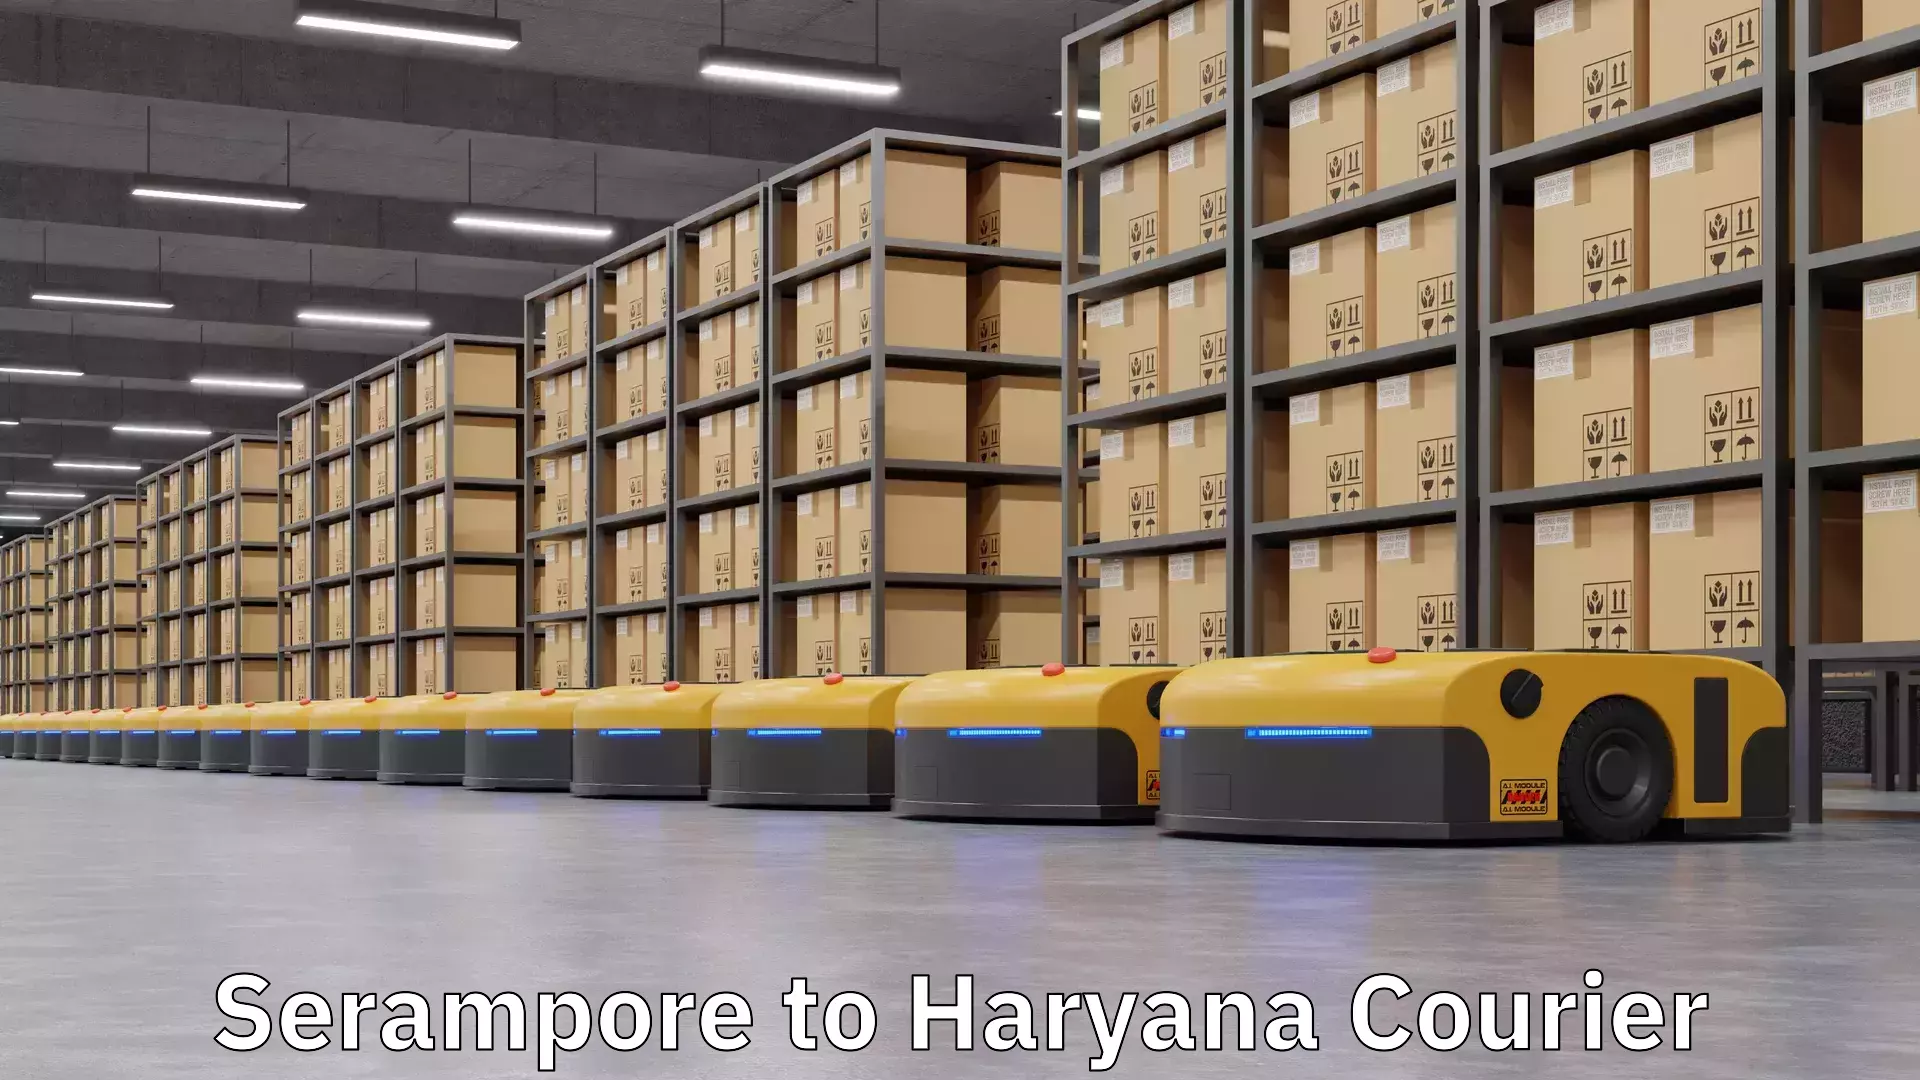 Digital courier platforms Serampore to Haryana